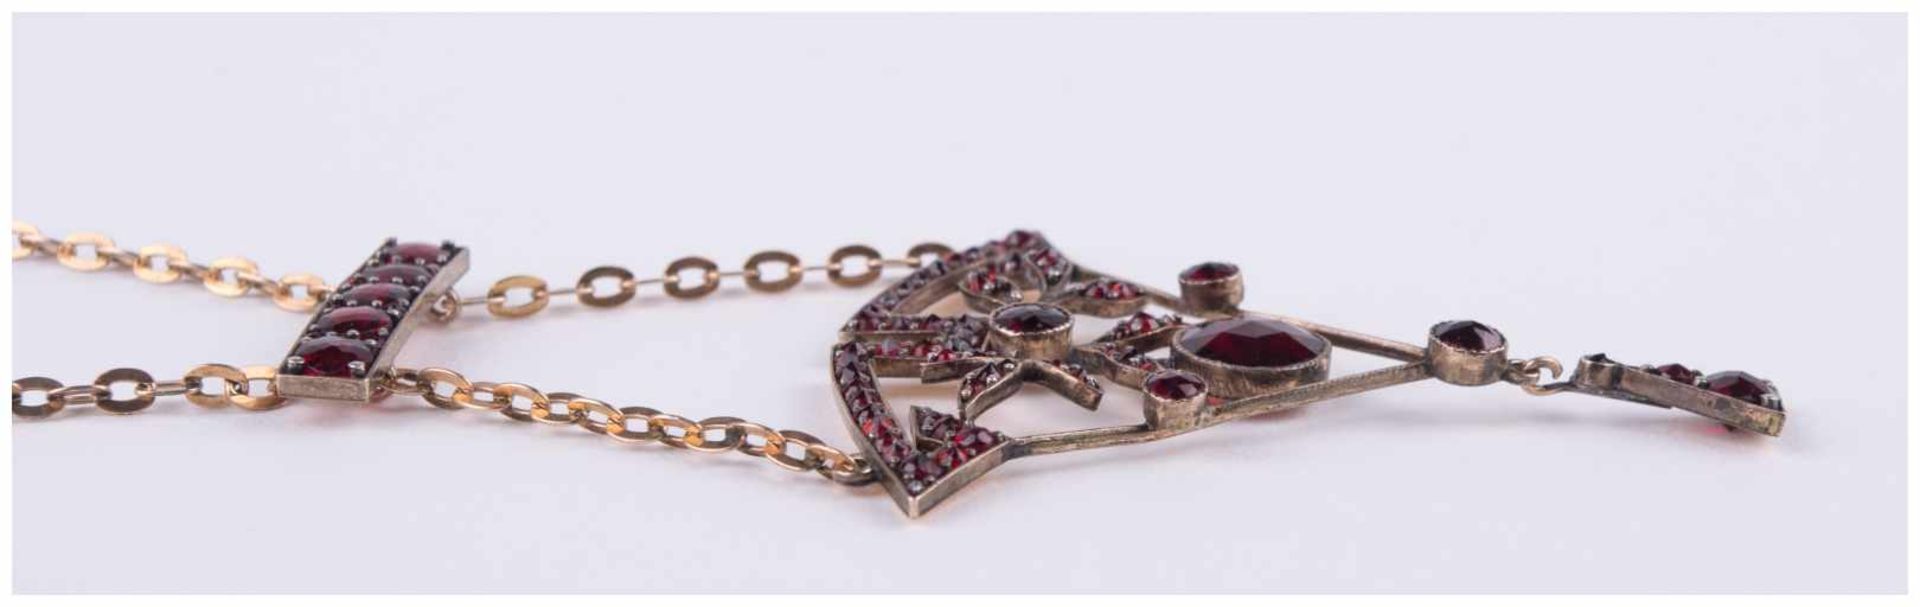 Jugendstil Granat-Collier / Art Nouveau garnet necklace - RG double, besetzt mit [...] - Image 7 of 8